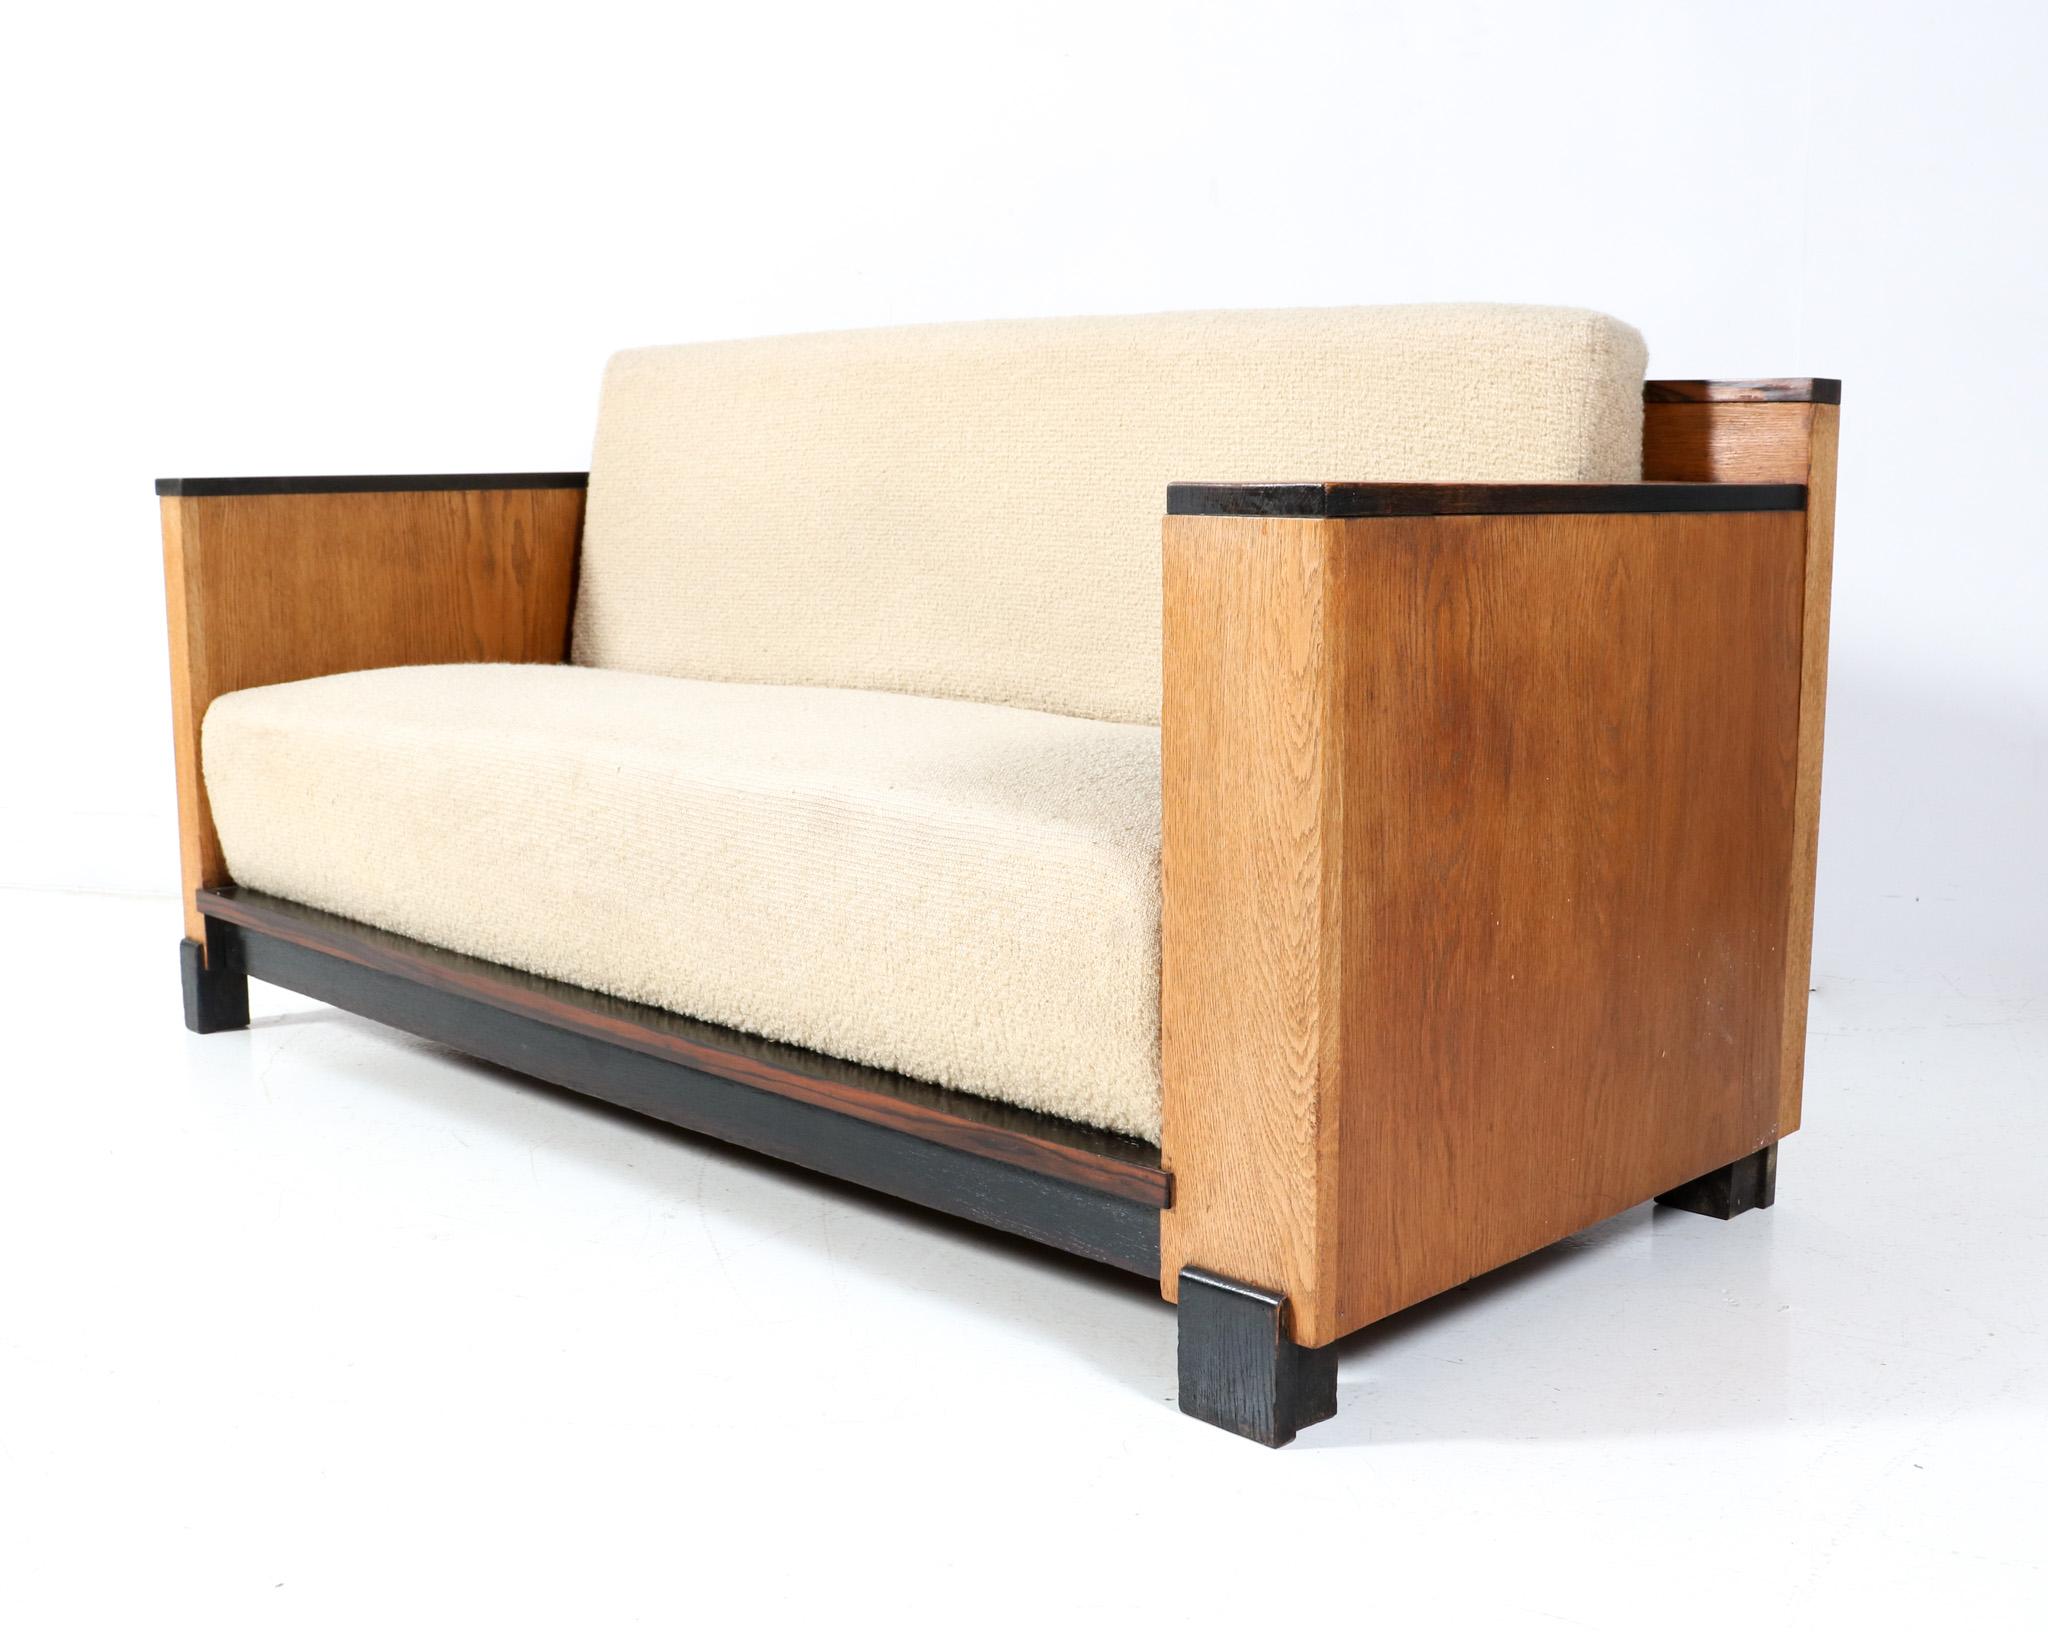 Dutch Oak Art Deco Modernist Bench or Sofa, 1920s For Sale